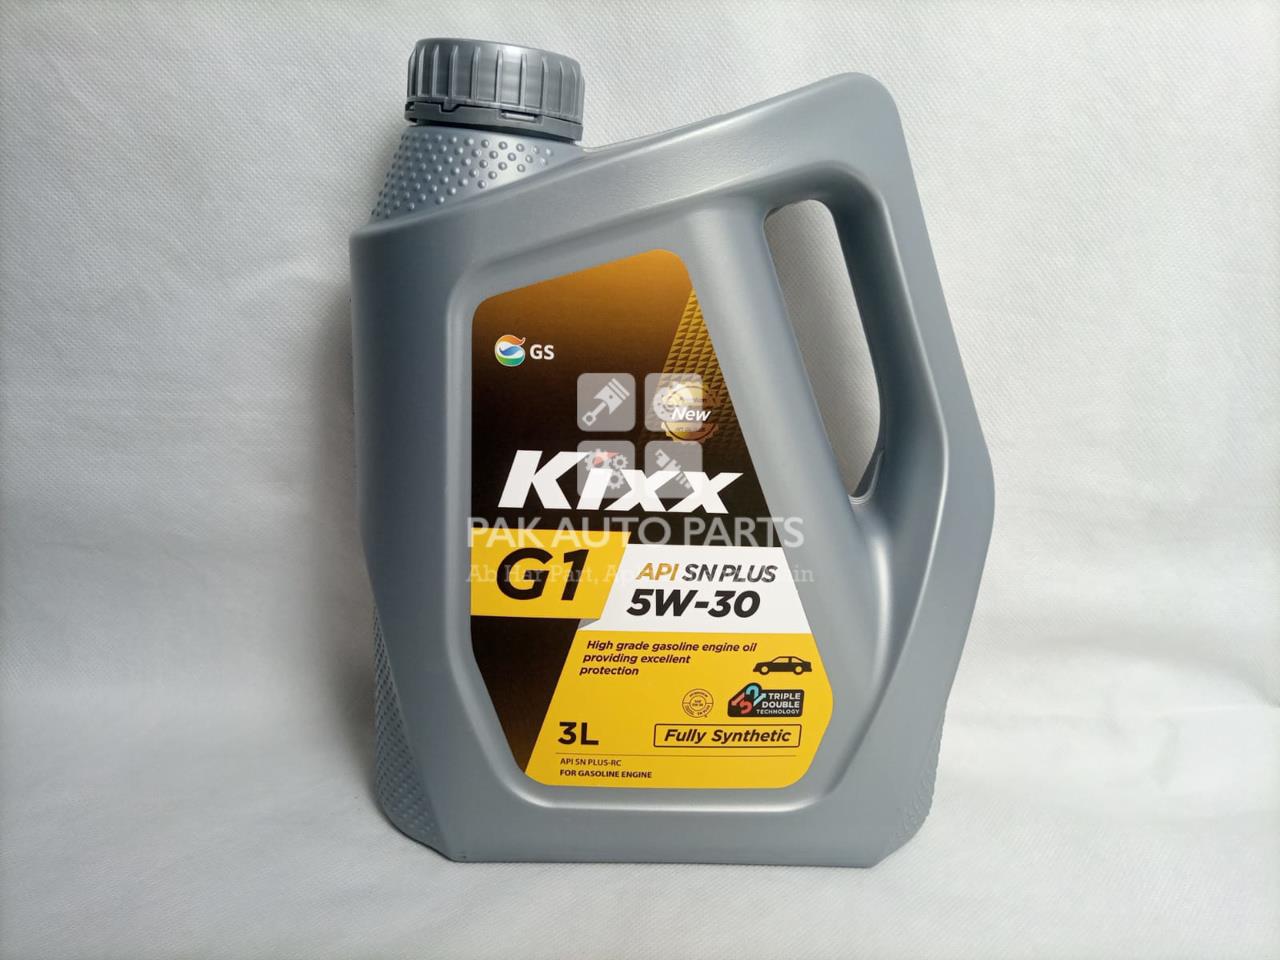 Picture of Kixx G1 API SN PLUS  5W-30 (3L) High grade gasoline engine oil providing excellent protection